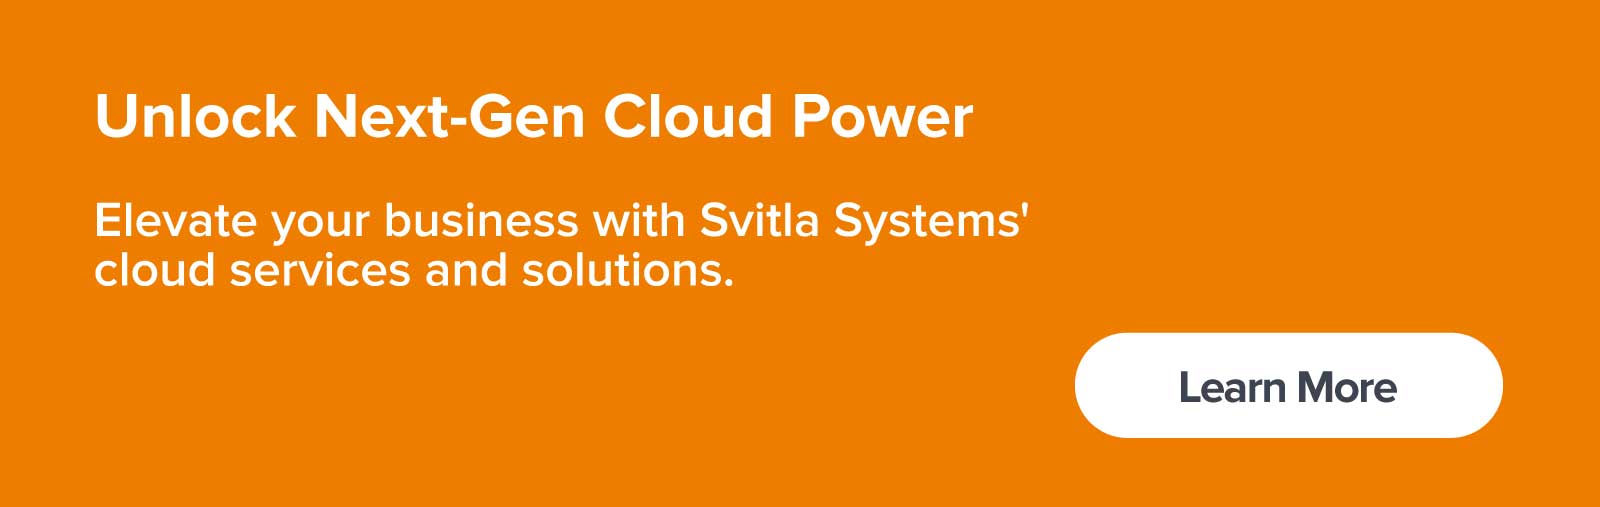 Svitla systems cloud